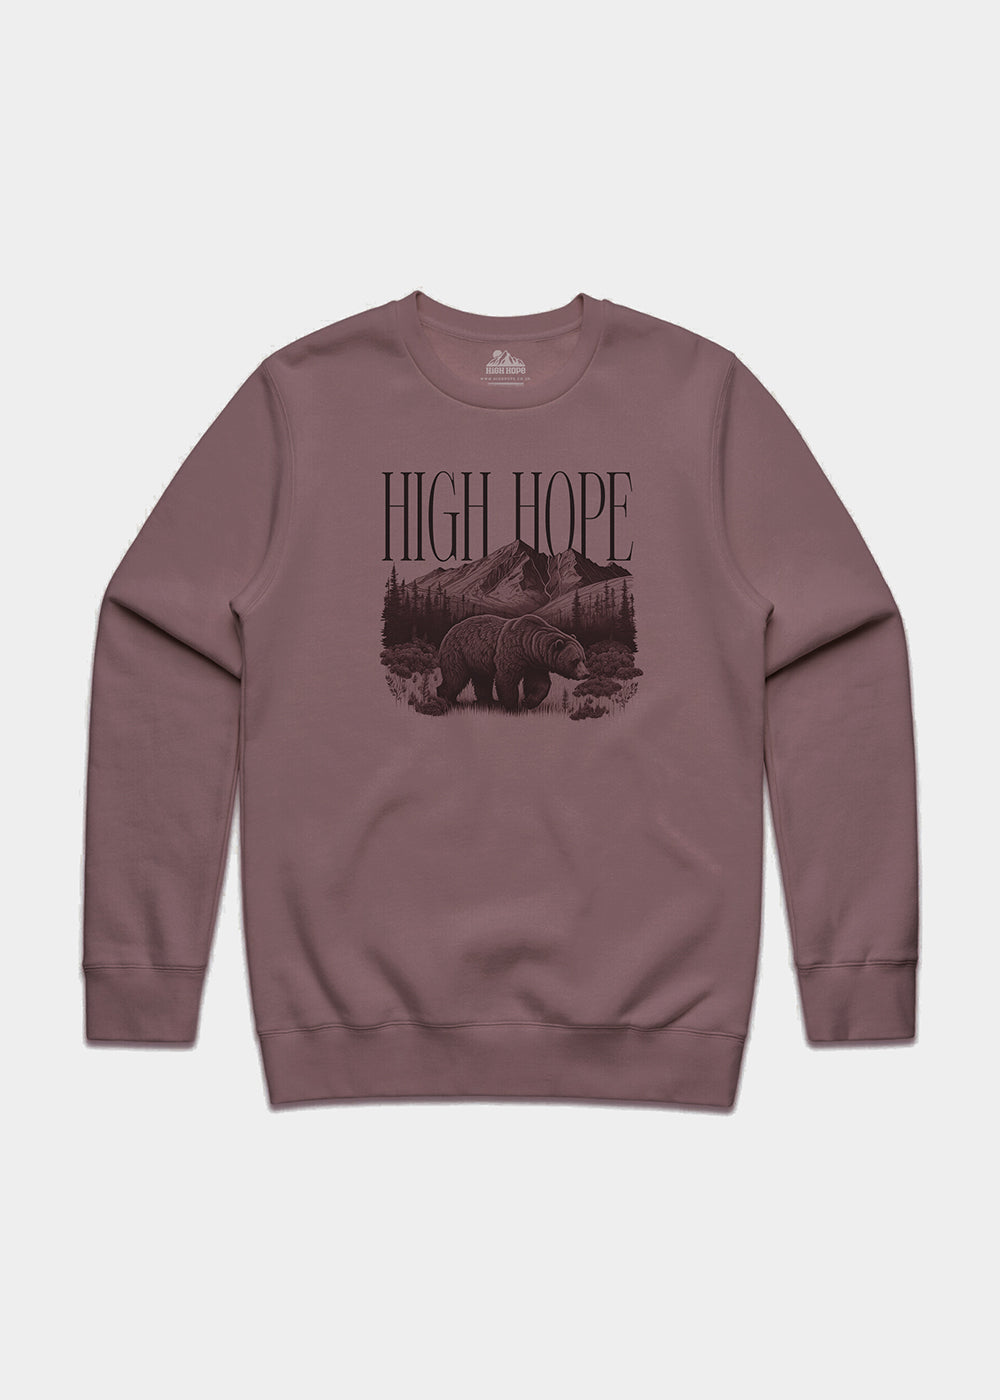 Bear Sweatshirt / Front Print